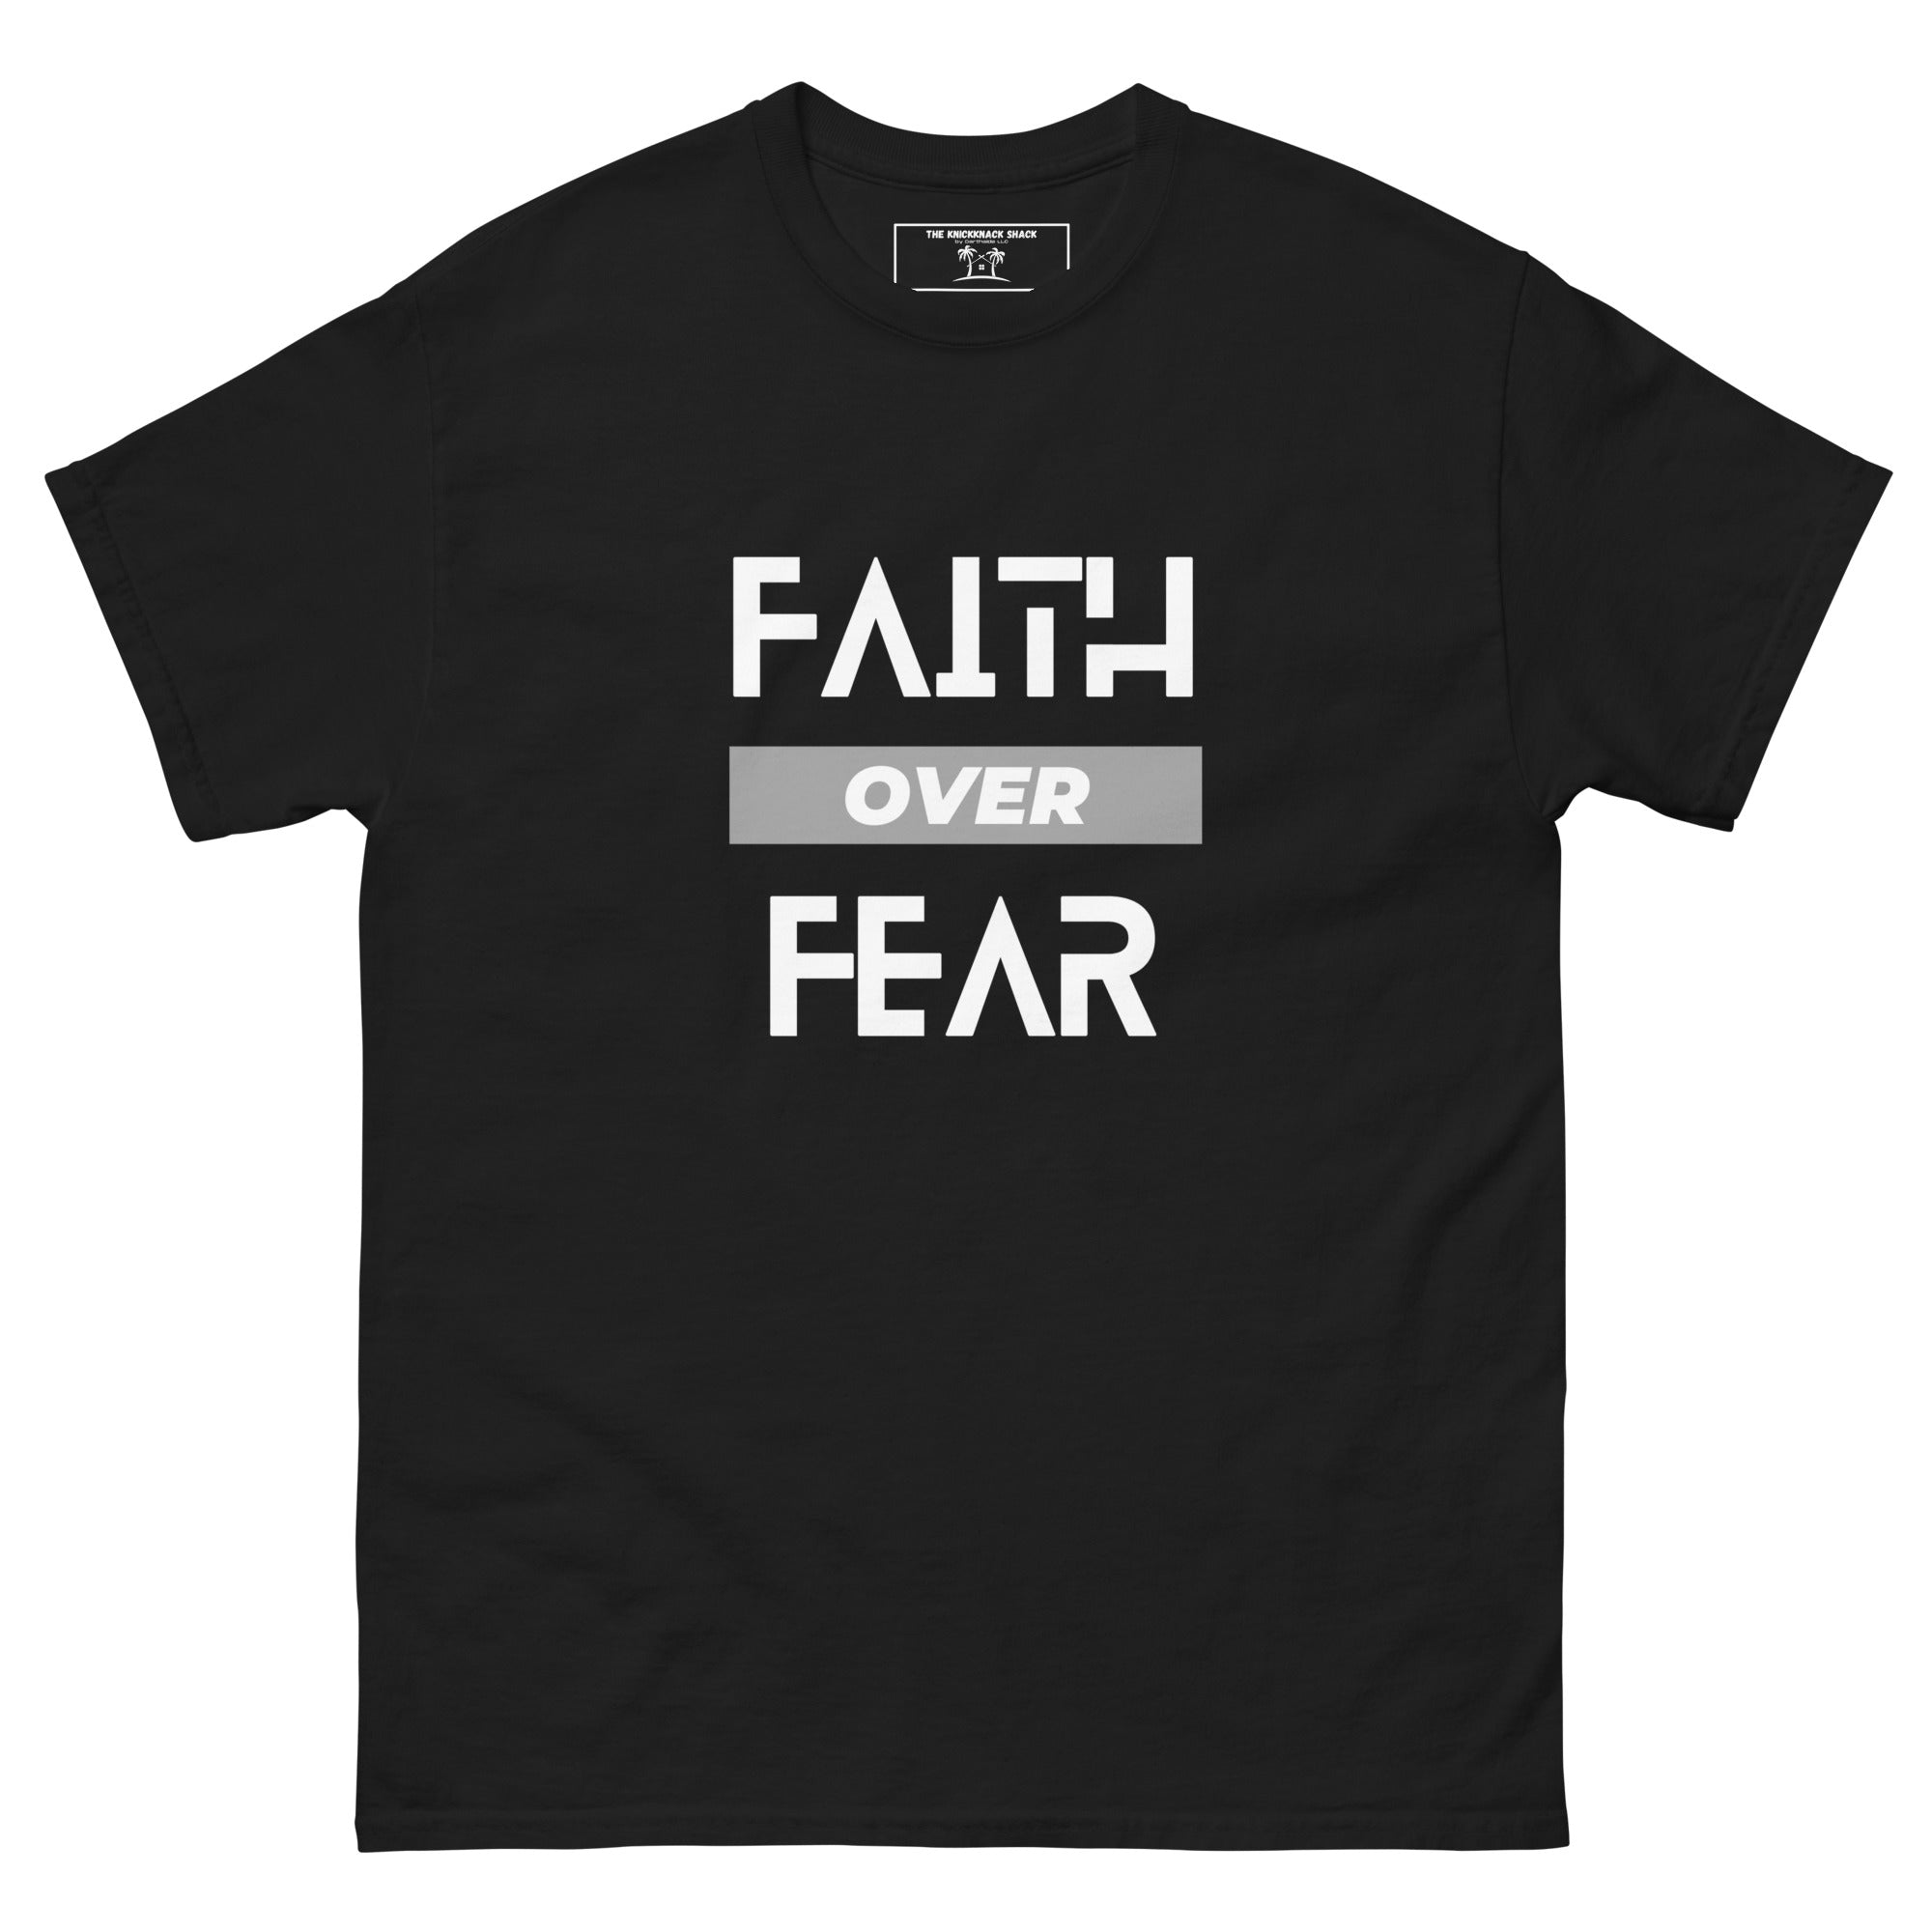 Tee-shirt classique - Faith Over Fear (couleurs sombres)